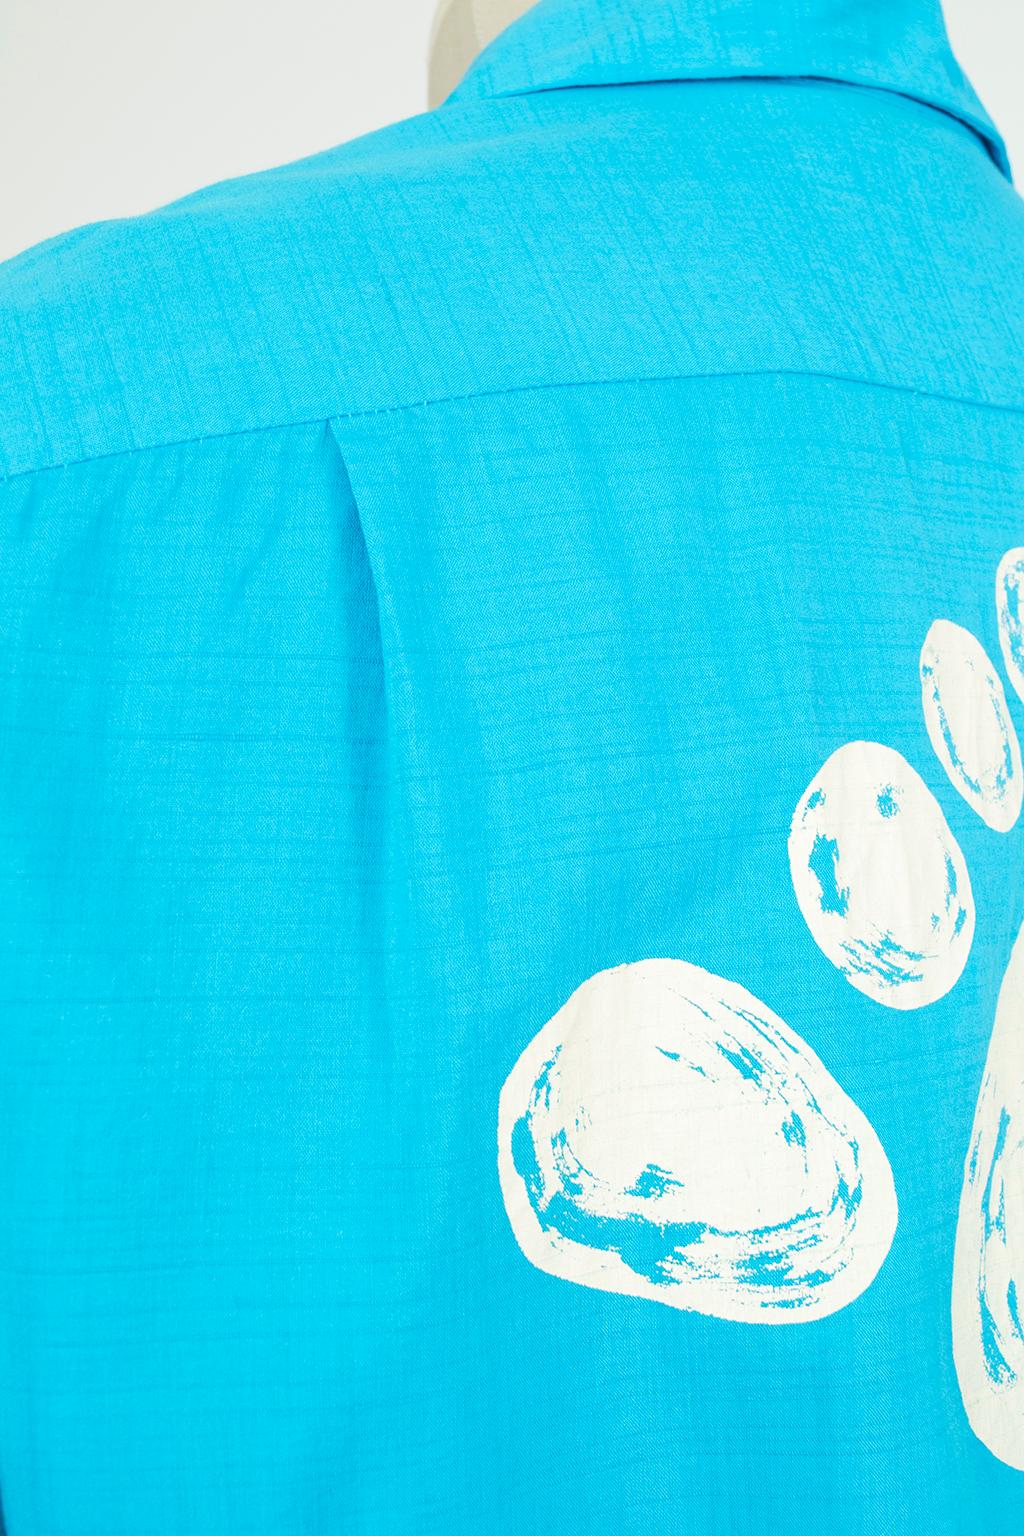 New Men's Iolani Sportswear Painted Turquoise Hawaiian Footprint Shirt–M, 1950s For Sale 6